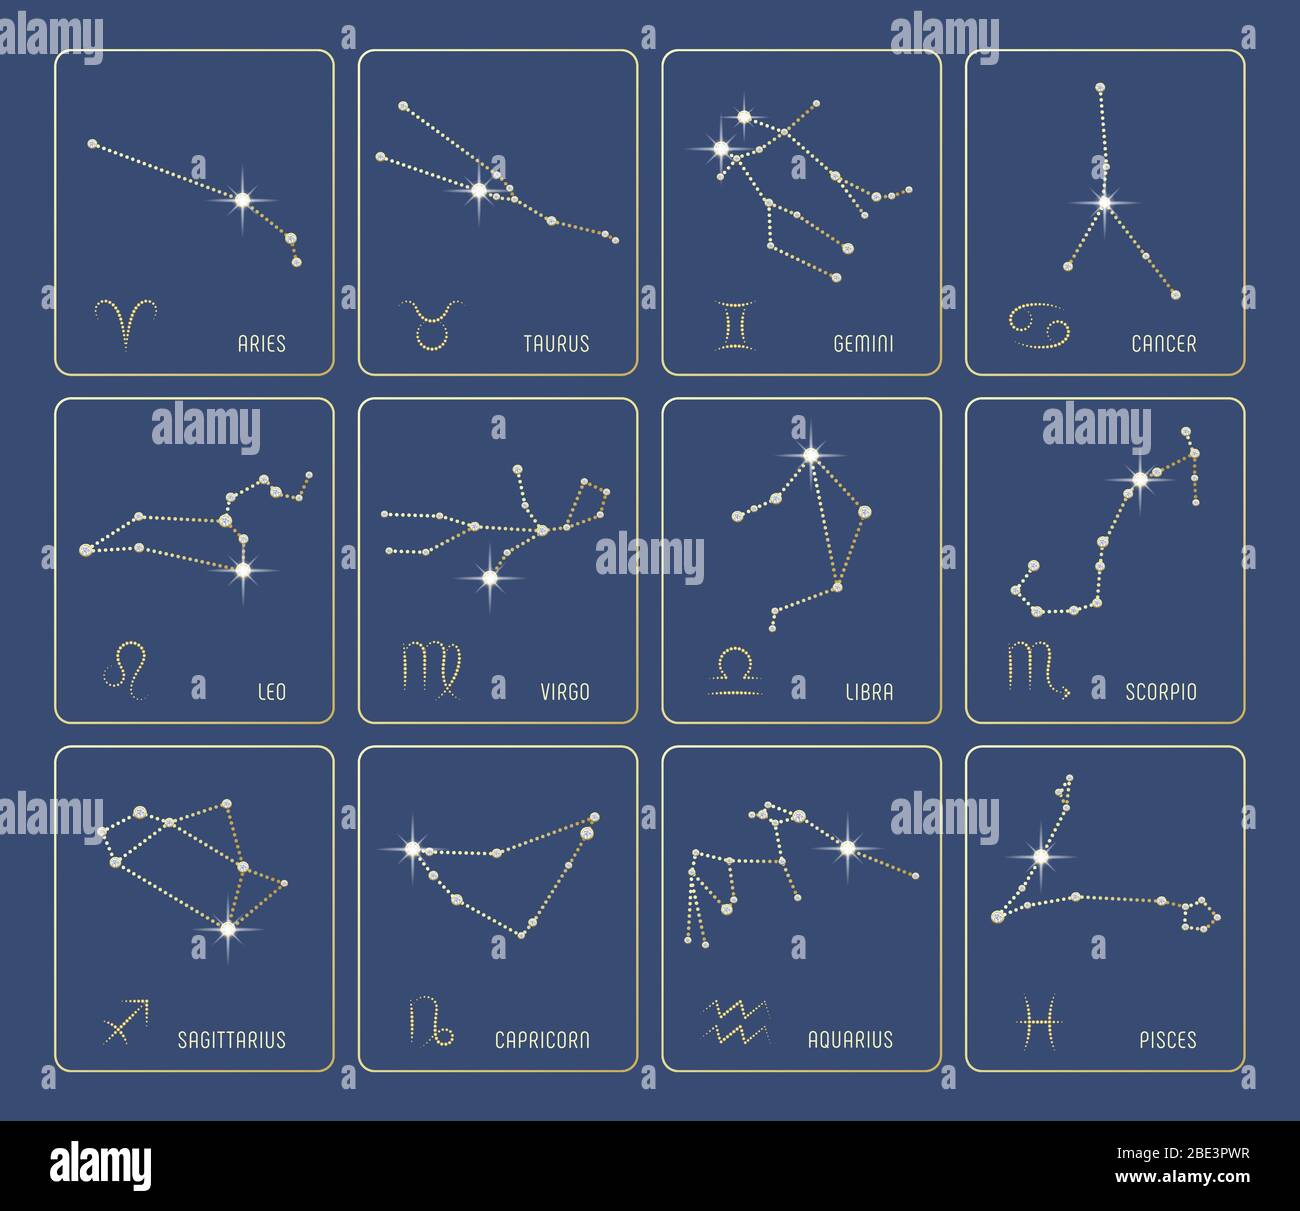 12 Zodiac Signs Constellations By Katerina Ivanova Th - vrogue.co